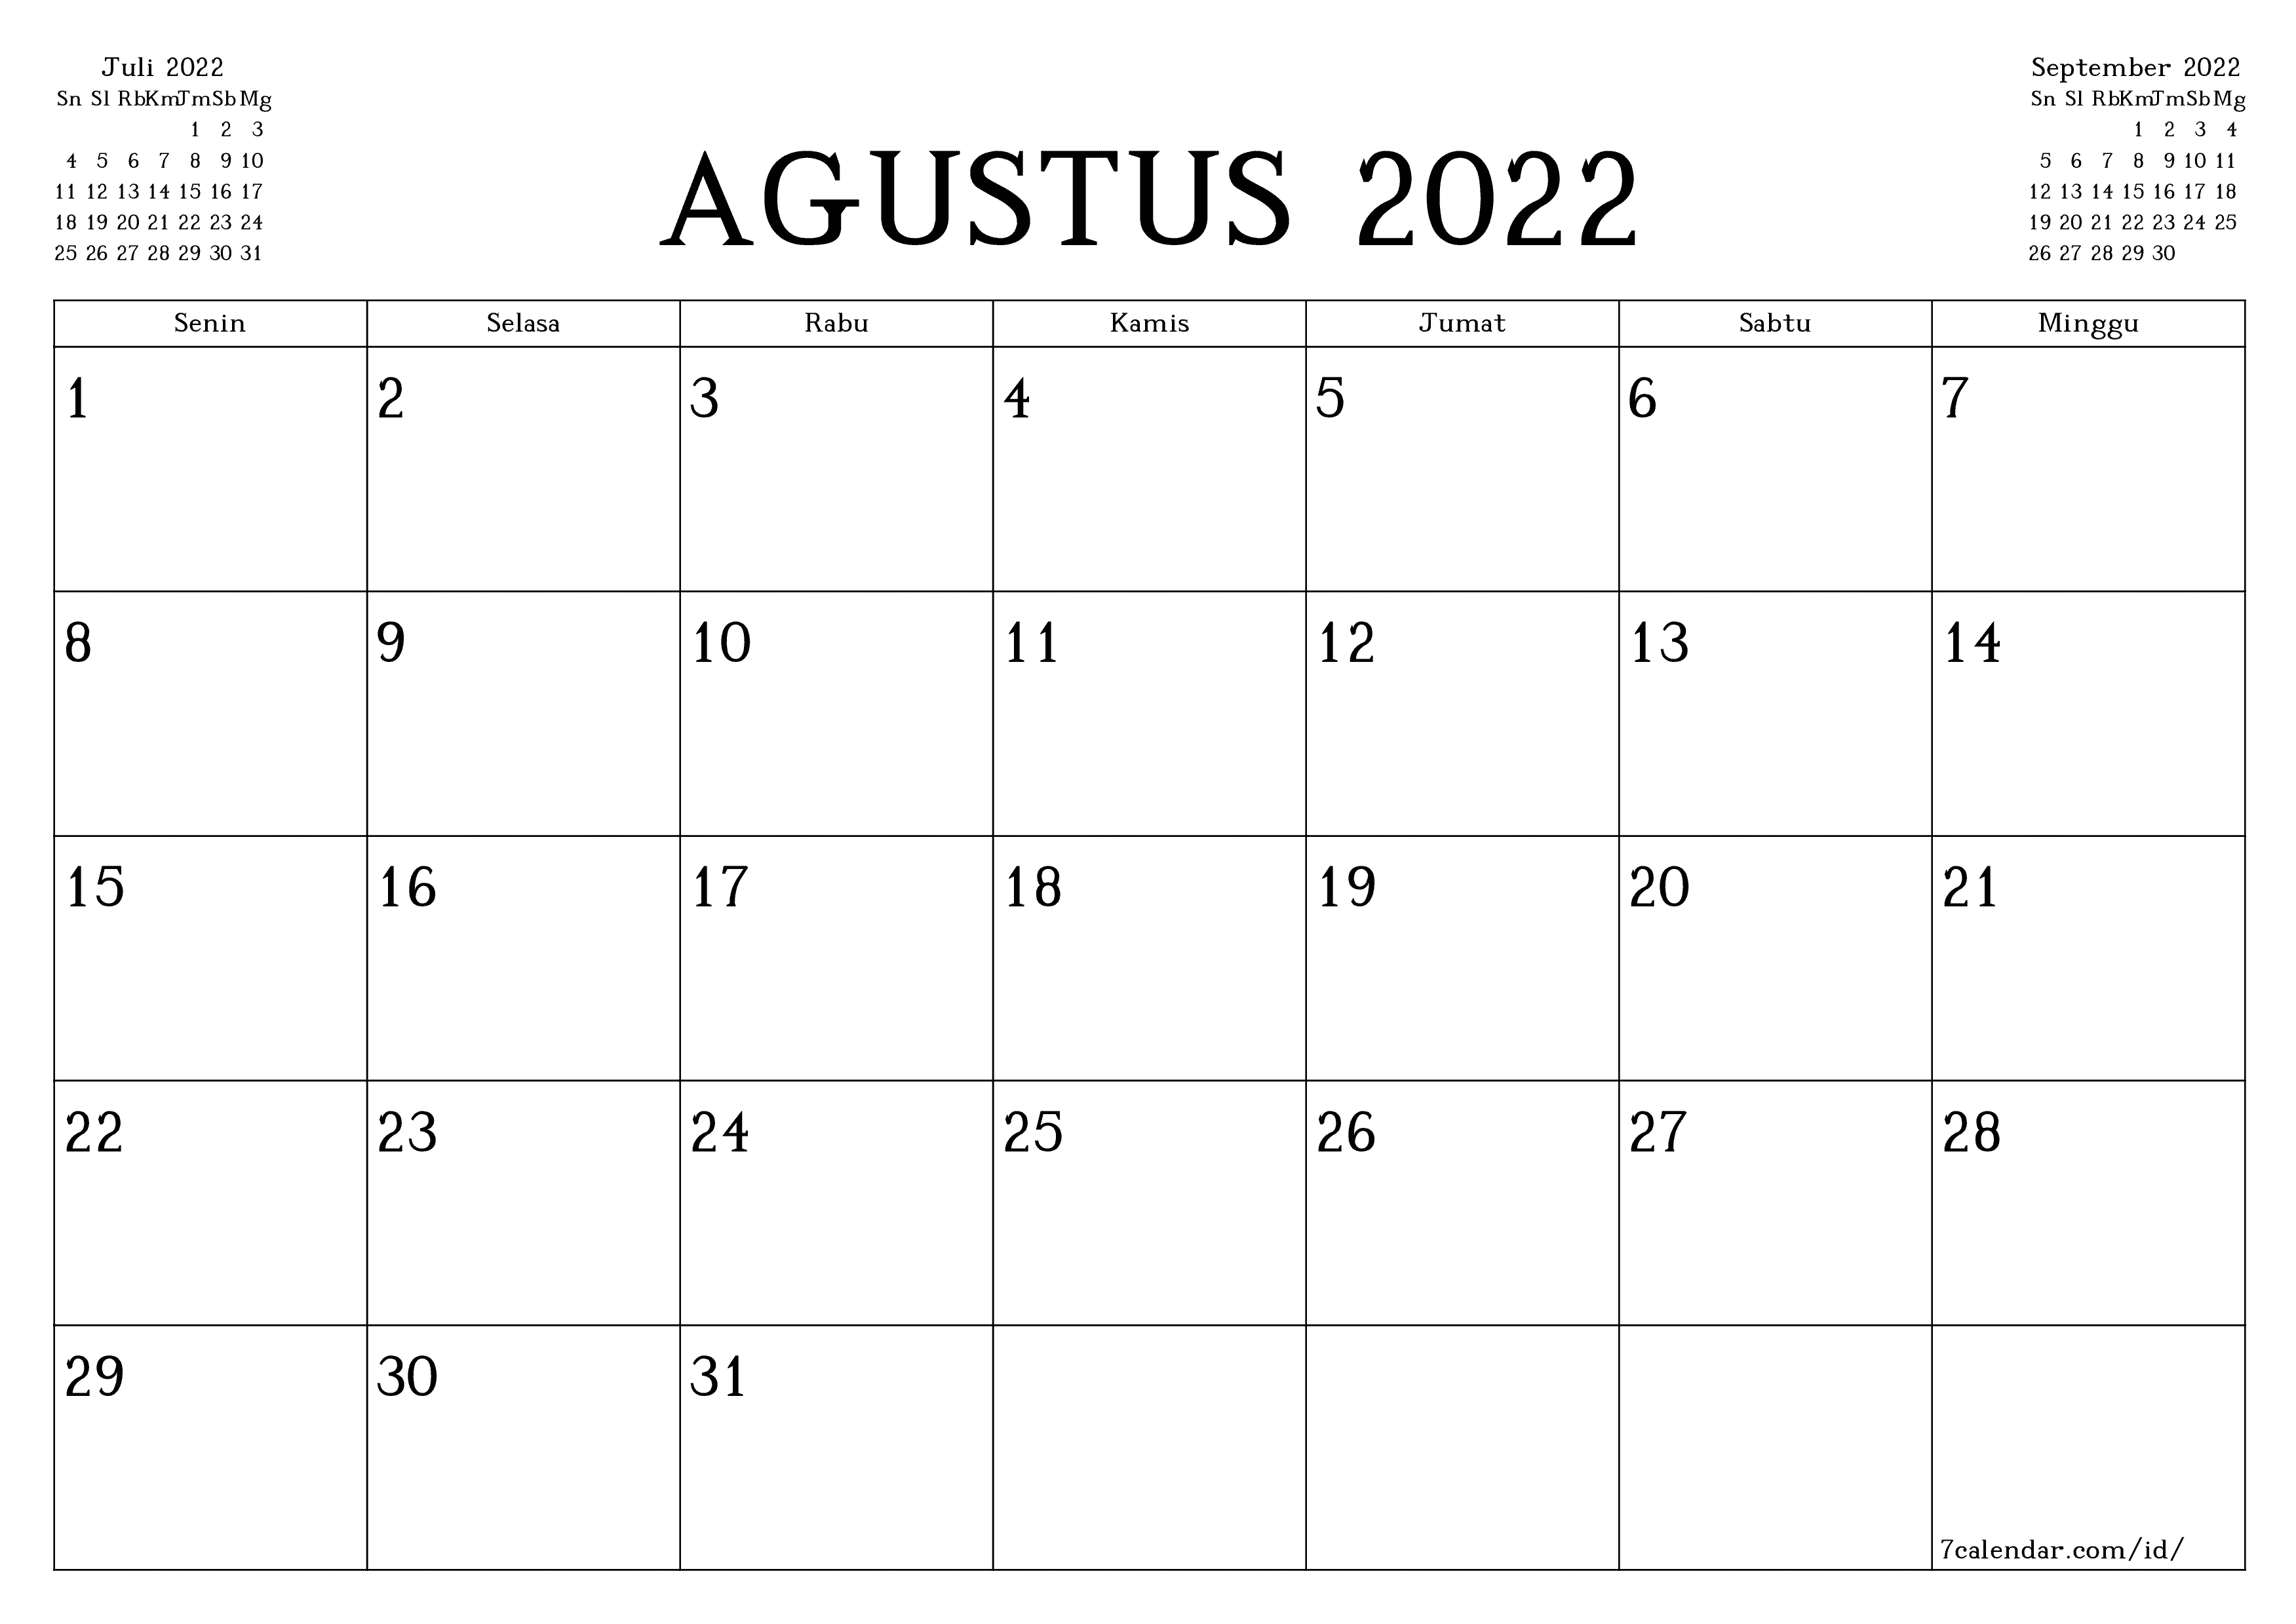 Kosongkan agenda bulanan untuk bulan Agustus 2022 dengan catatan, simpan dan cetak ke PDF PNG Indonesian - 7calendar.com